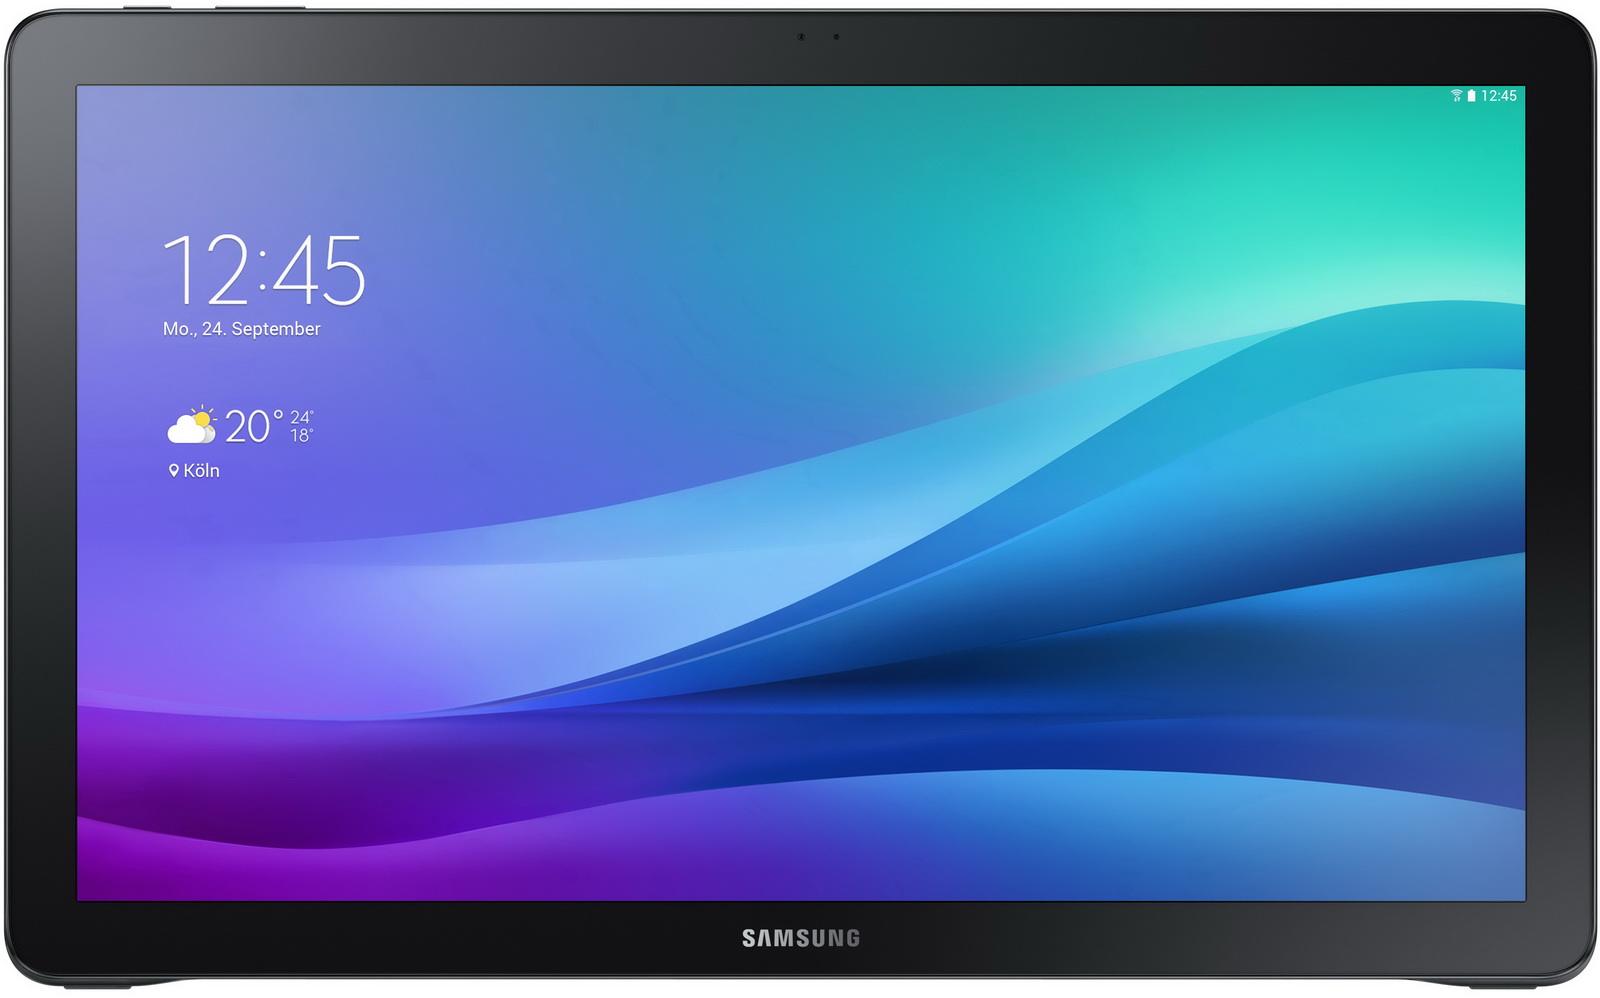 Программу Samsung Smart View 2.0 Для Ноутбука